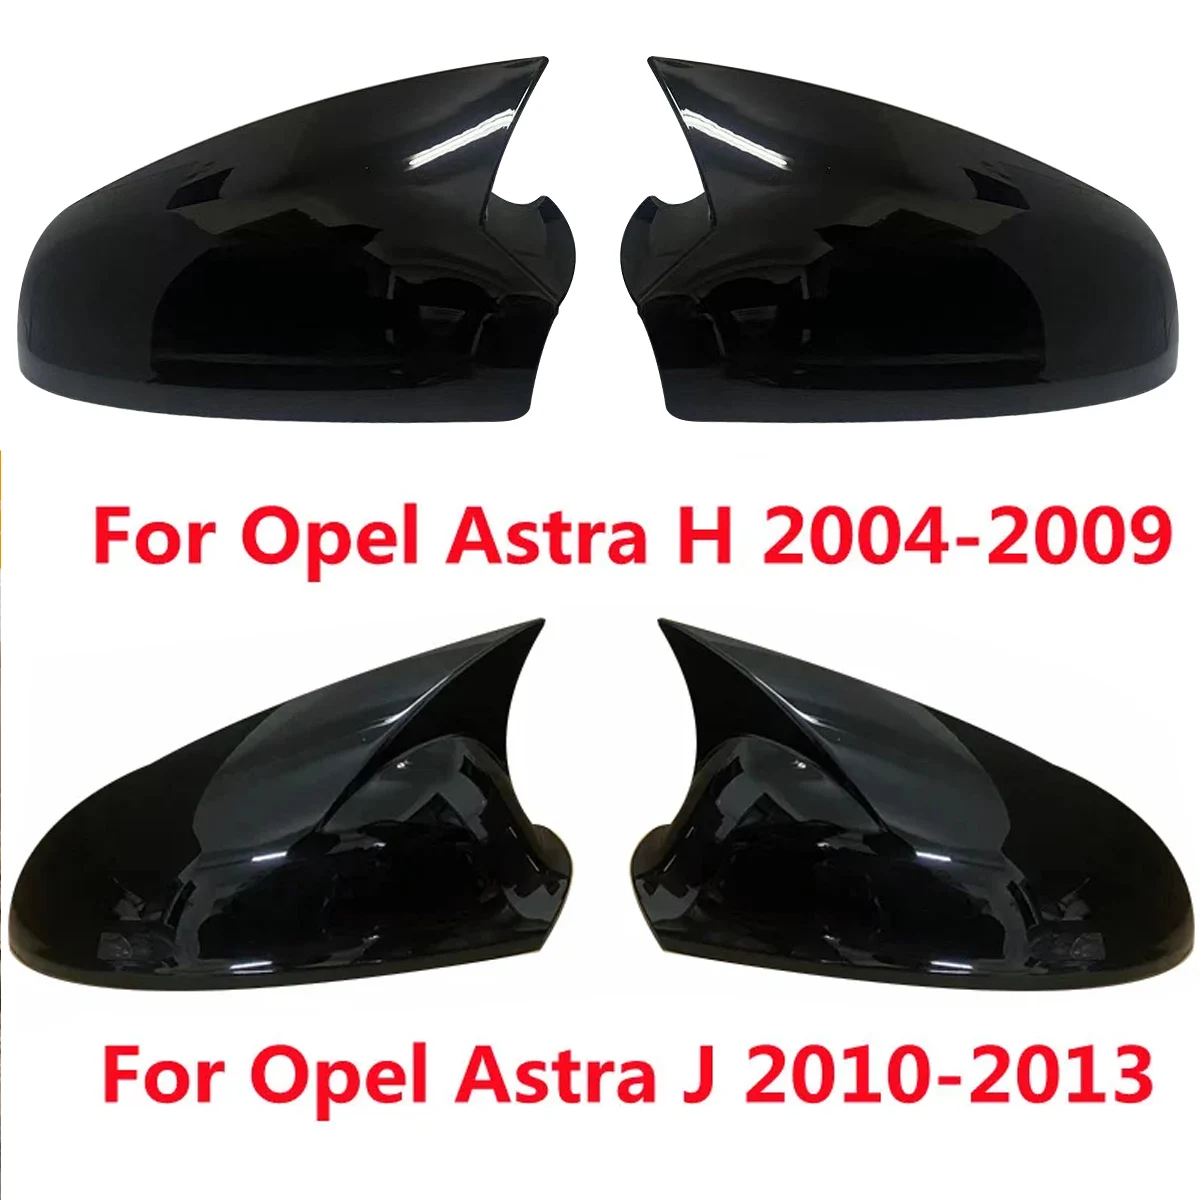 Carcasa de espejo retrovisor lateral para Opel Astra H 2004-2009, negro  brillante, cubiertas de espejo retrovisor 6428200 6428199